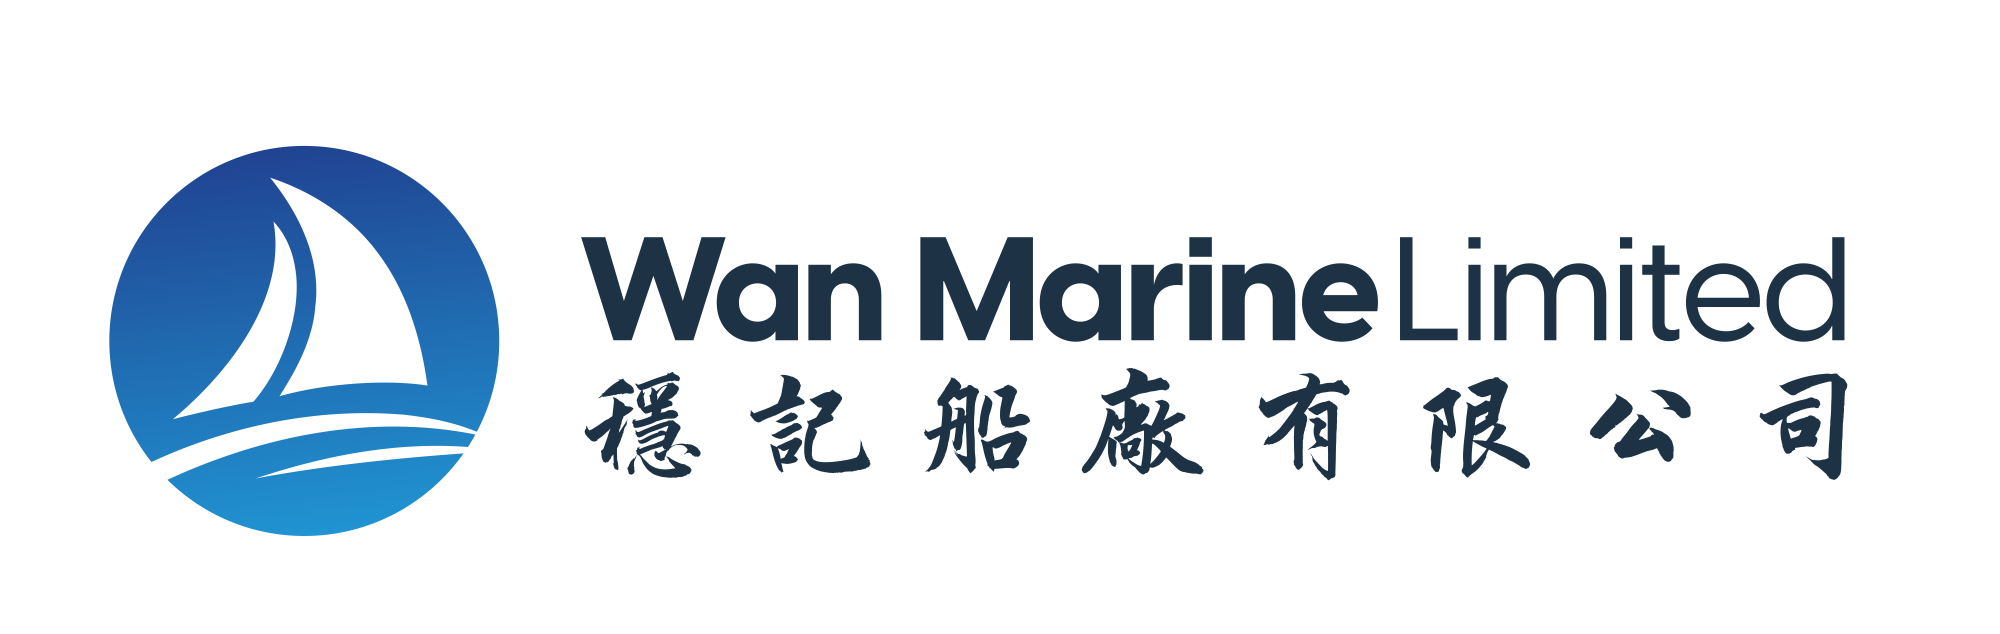 Wan Marine Limited